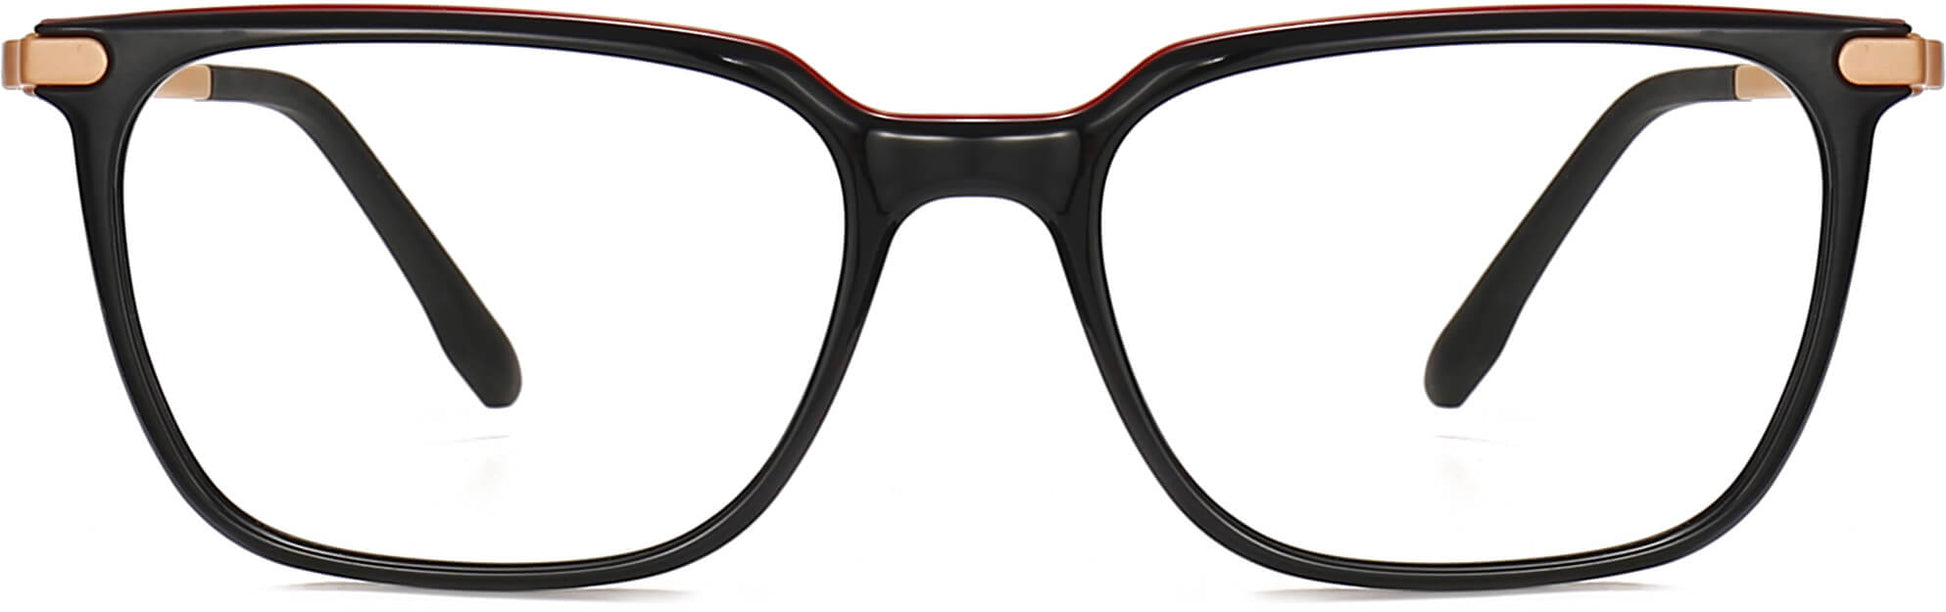 Kamden Square Black Eyeglasses from ANRRI, front view